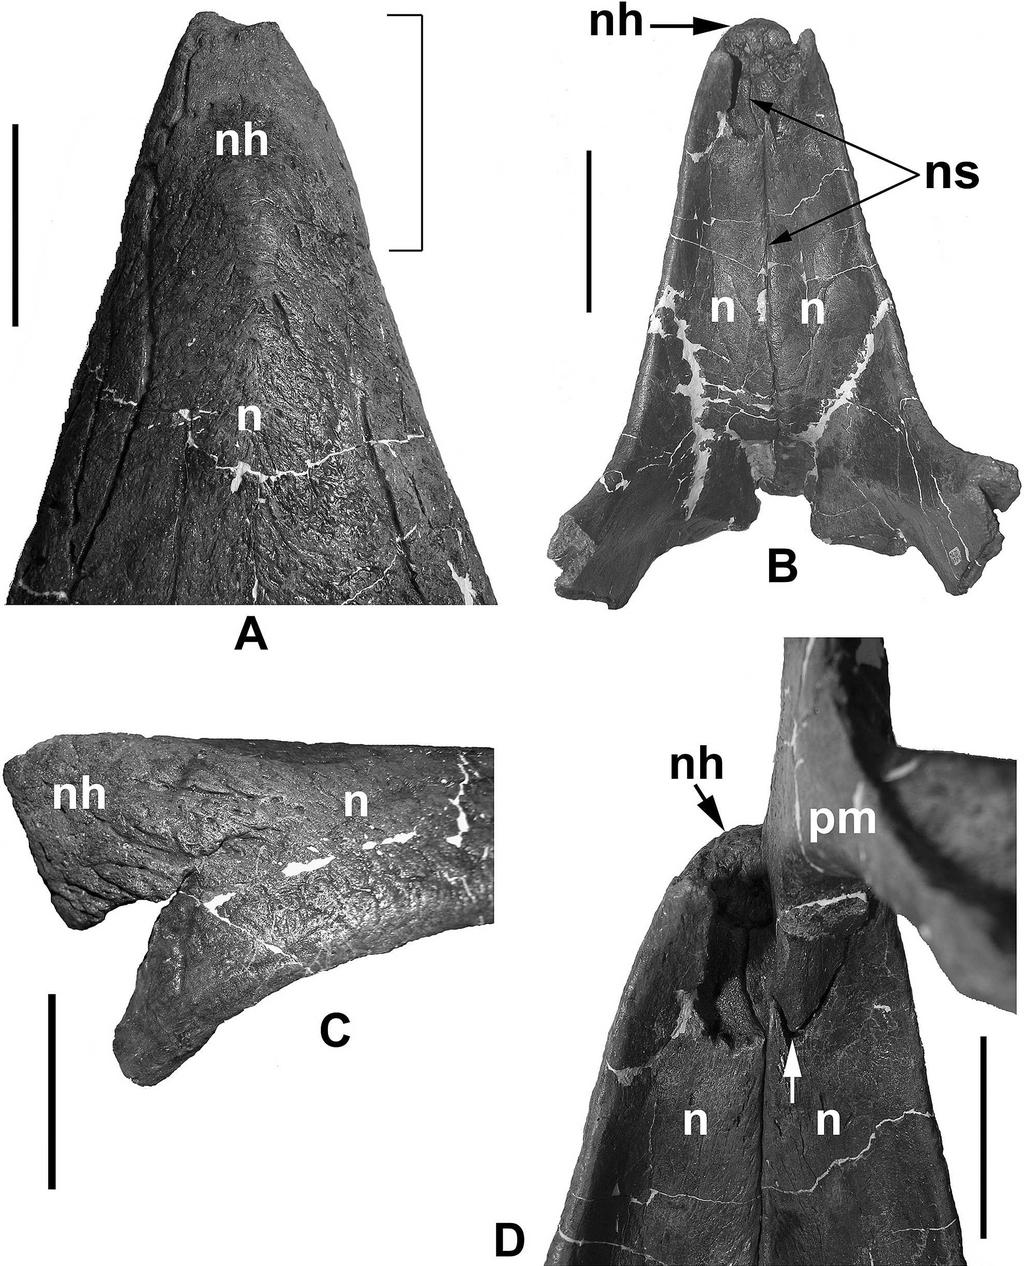 138 JOURNAL OF VERTEBRATE PALEONTOLOGY, VOL. 28, NO. 1, 2008 FIGURE 3. Nasal complex of a subadult Triceratops skull, MOR 1120.